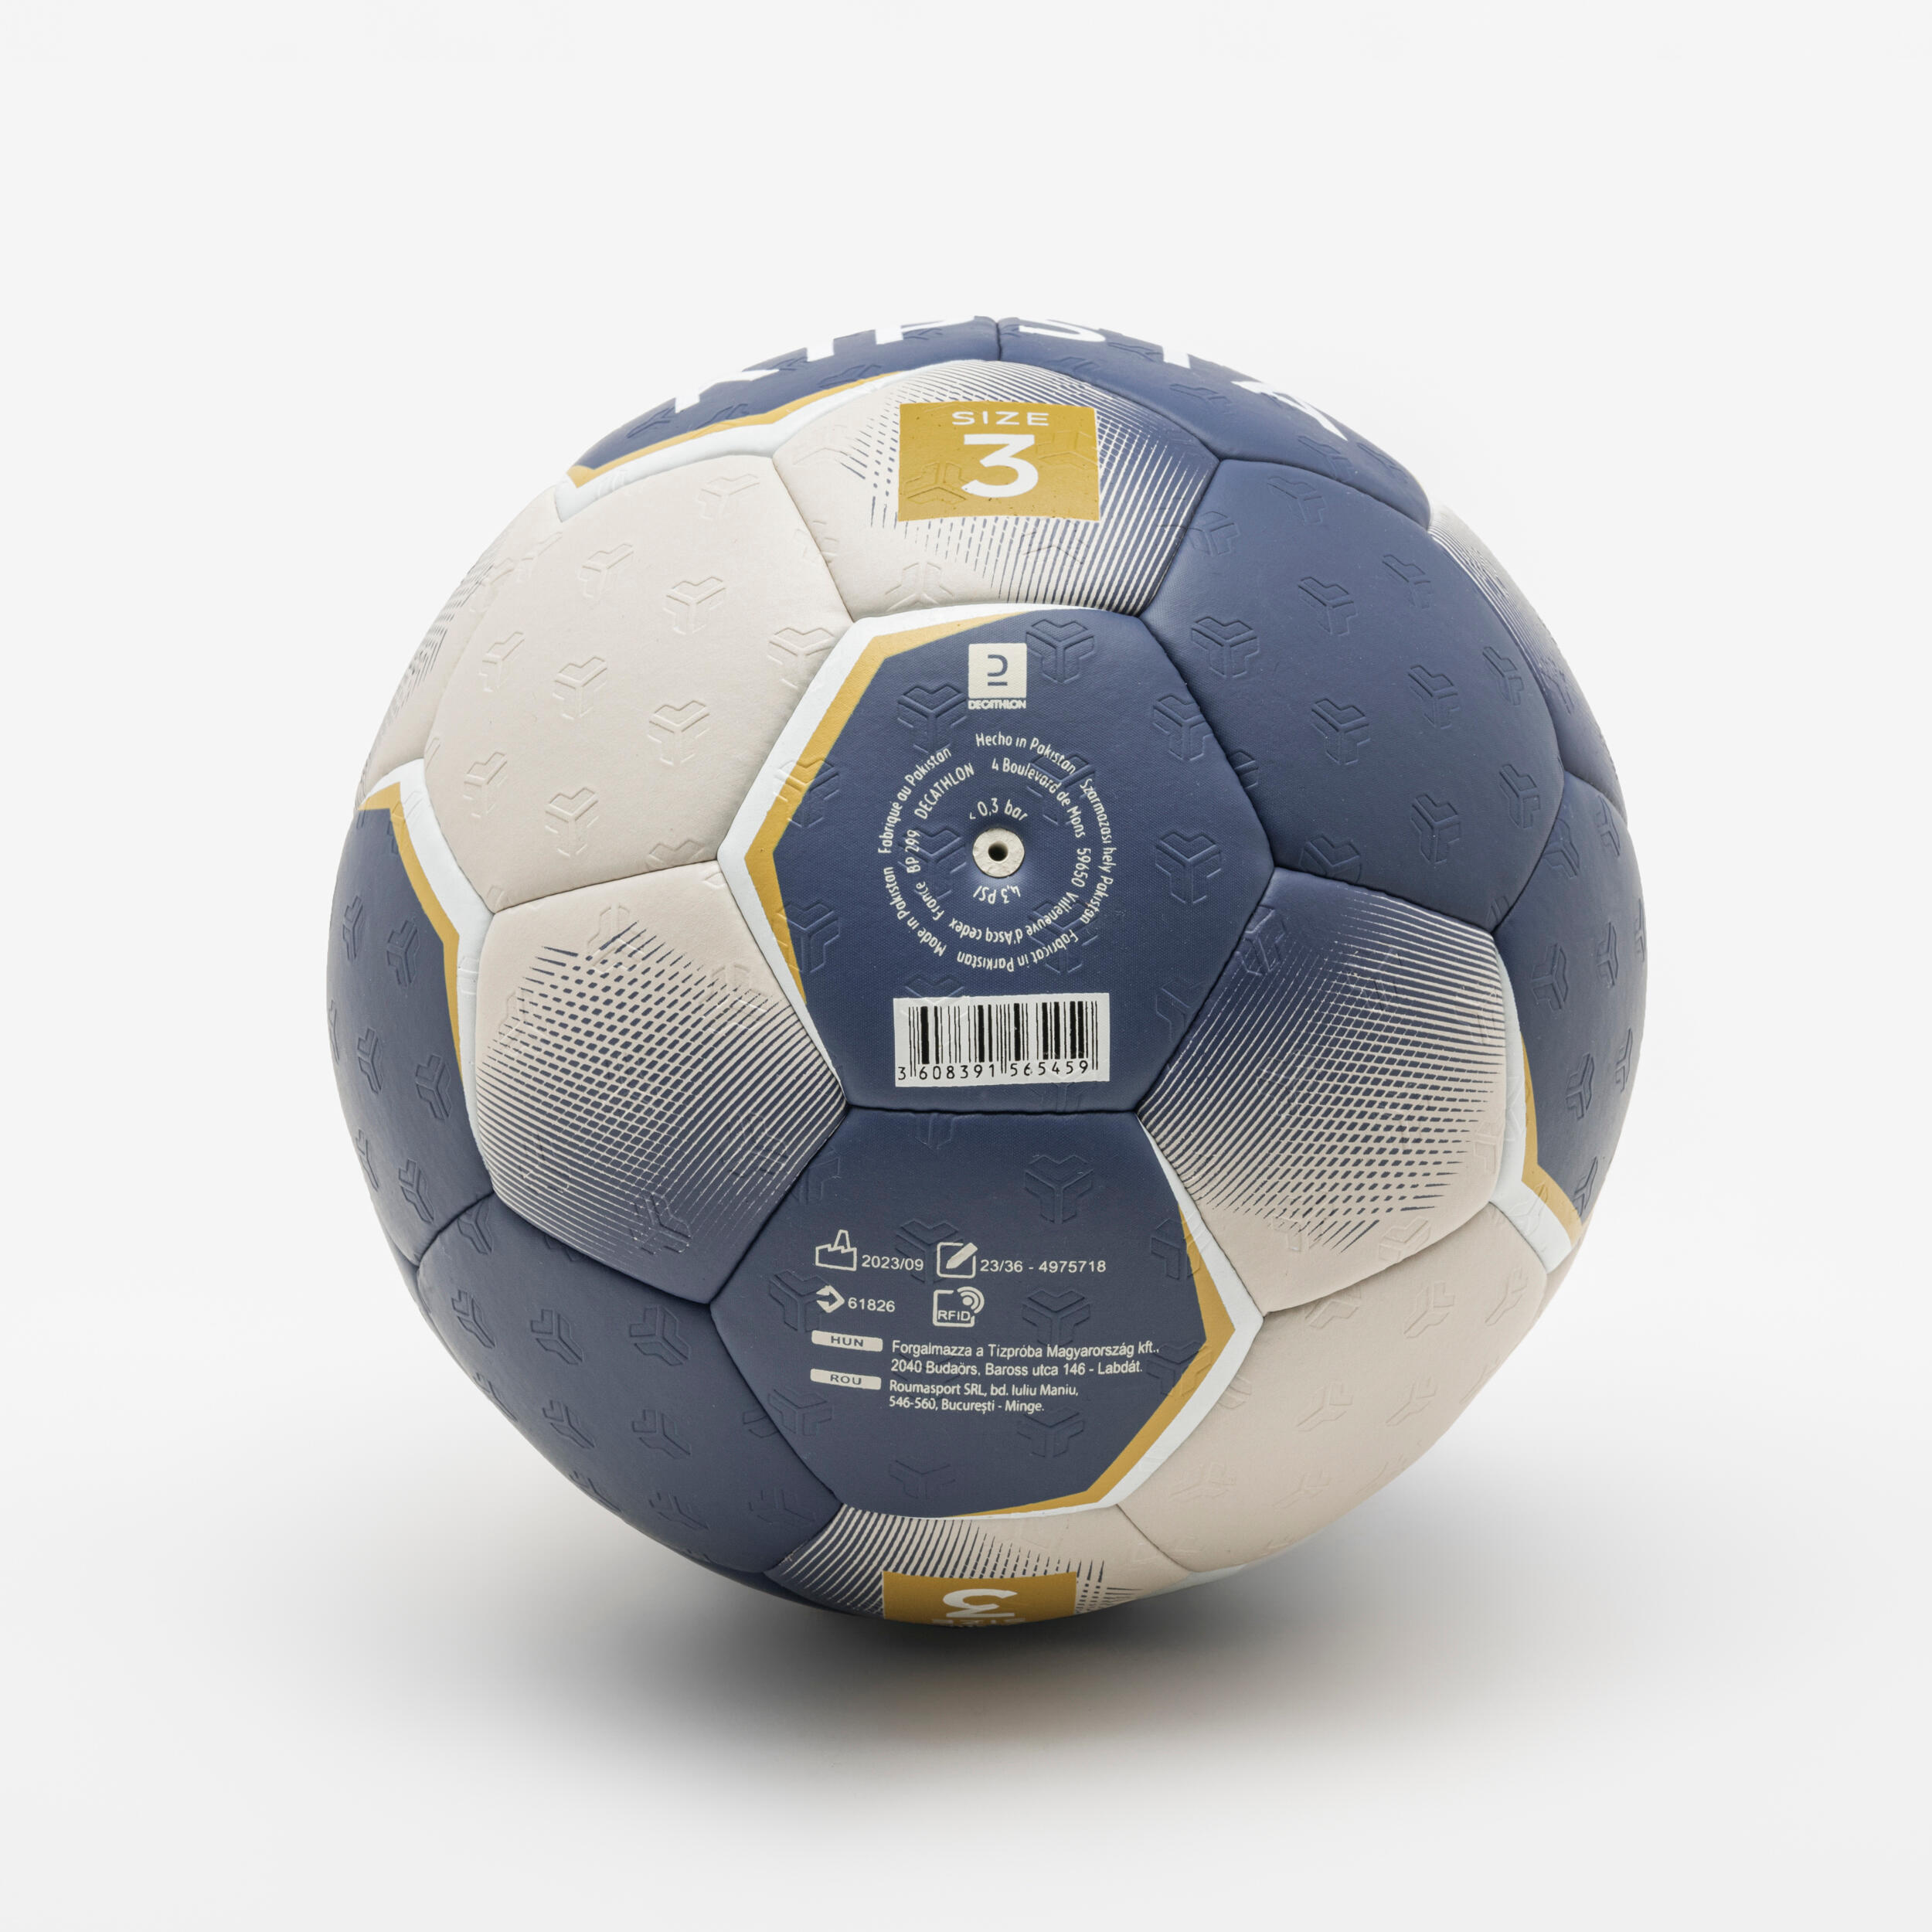 Handball Size 3 H500 - Hybrid Blue/Grey 3/5